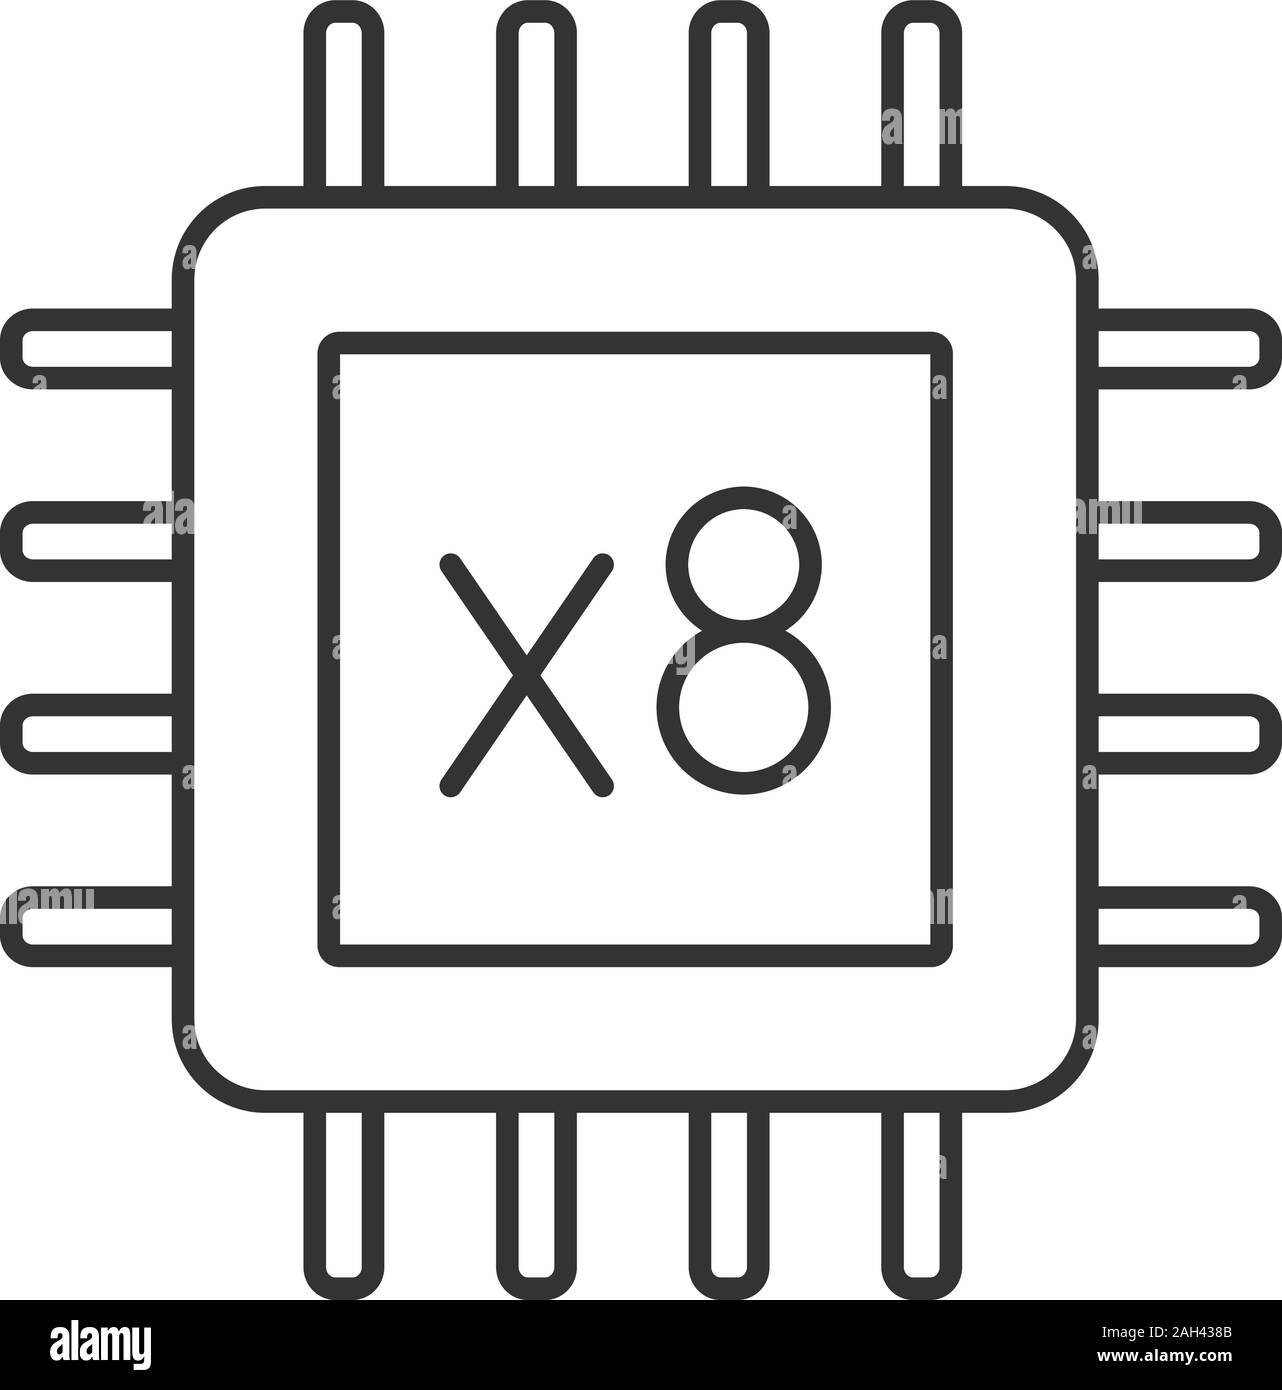 Octa-Prozessor lineare Symbol. Dünne Linie Abbildung. Acht Mikroprozessor.  Microchip, Chipsatz. CPU. Multi-core-Prozessor. Integrierte Schaltung  Stock-Vektorgrafik - Alamy